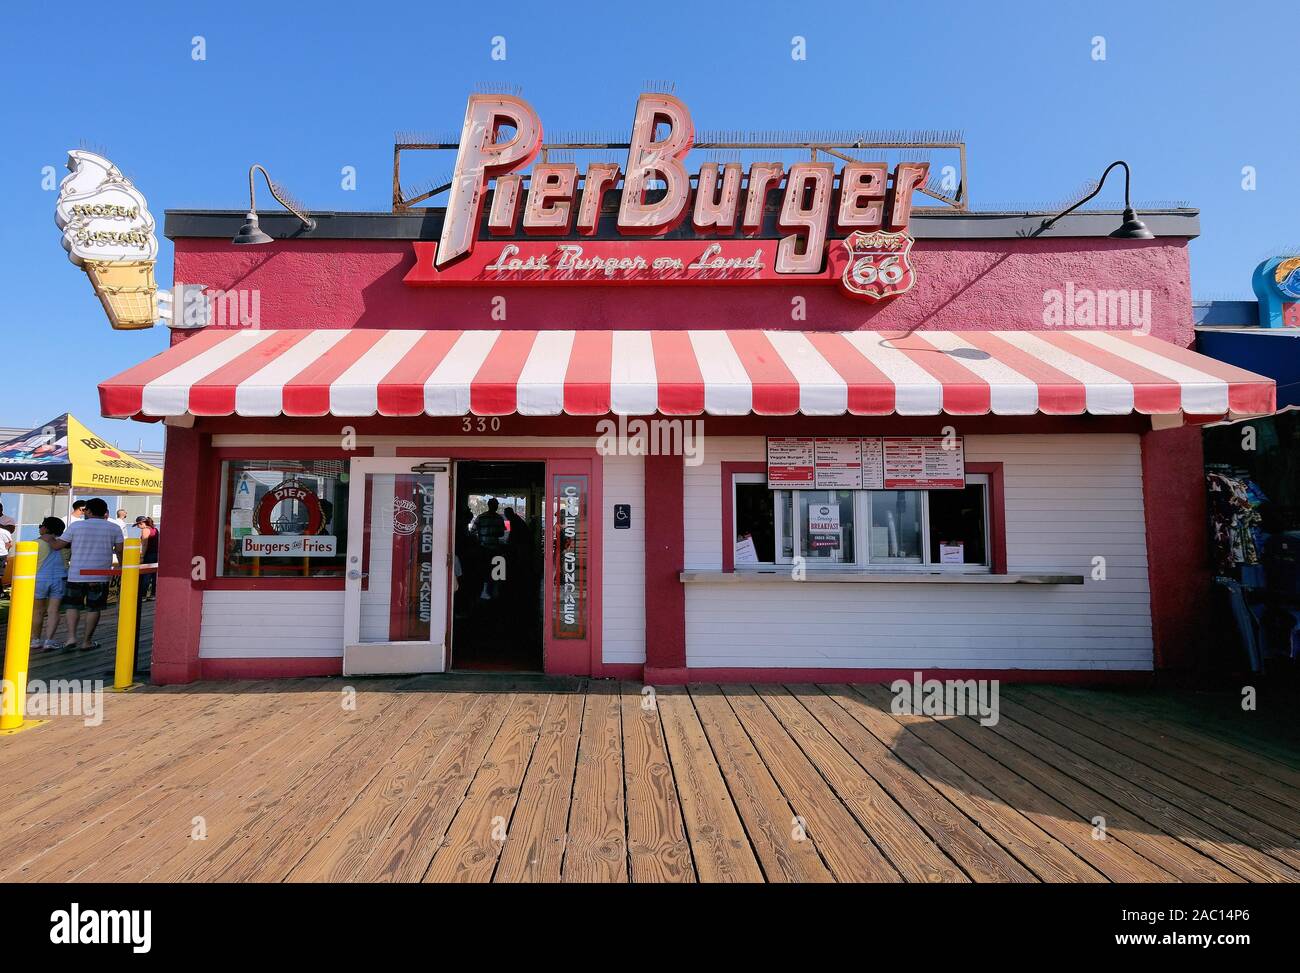 Snack-bar Burger, la jetée de Santa Monica, Santa Monica, Californie, USA Banque D'Images